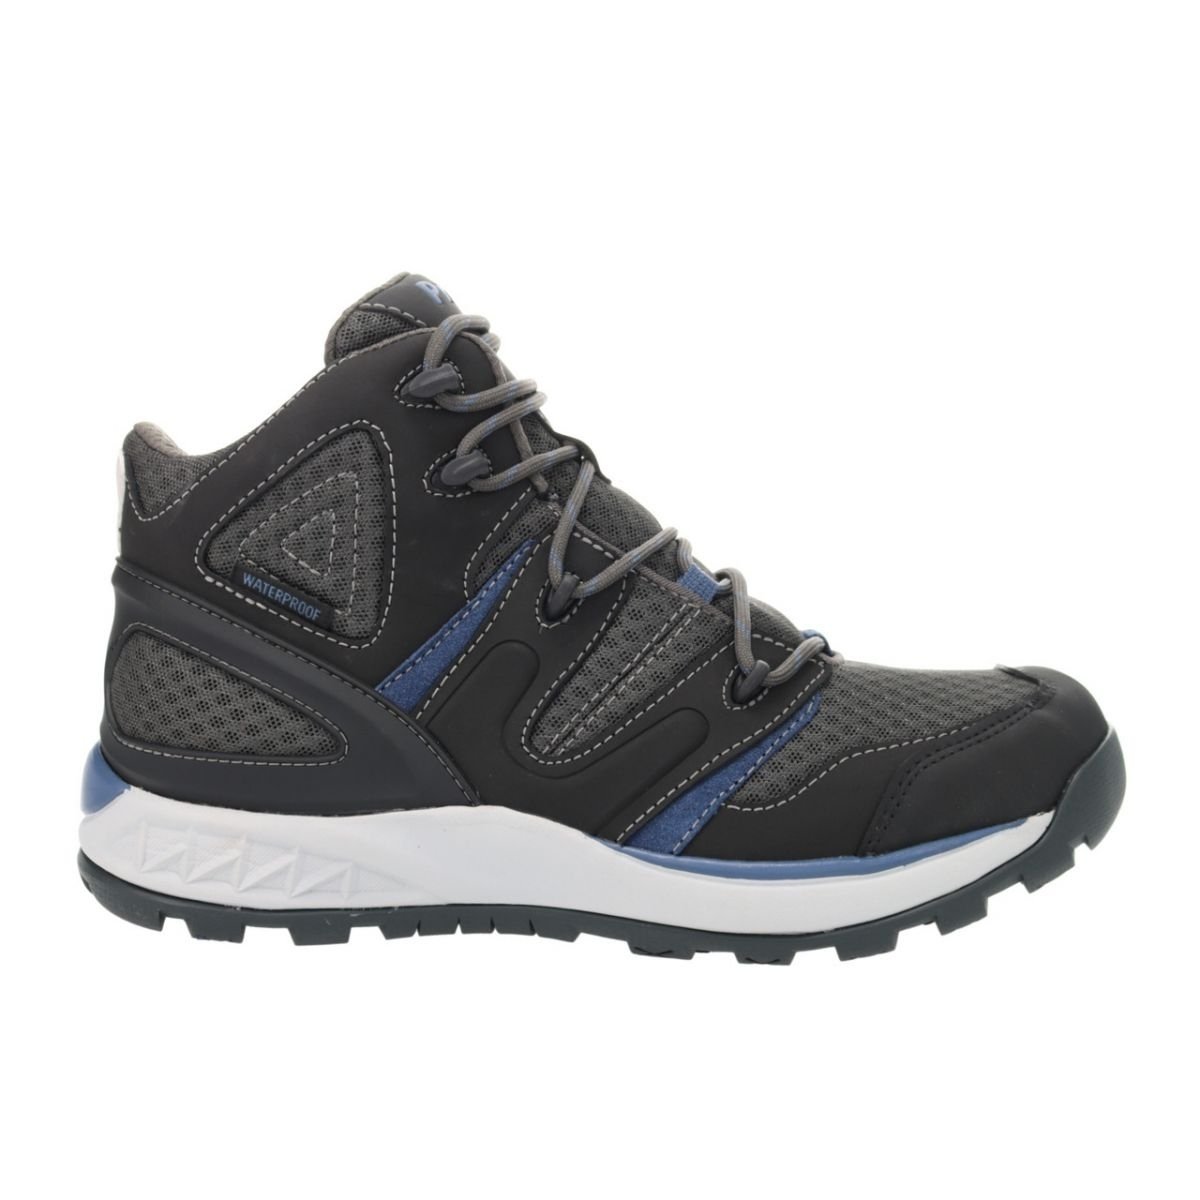 Propet Men's Veymont Waterproof Hiking Boot Grey/Blue - MOA022SGRB GREY/BLUE - GREY/BLUE, 10 XX-Wide